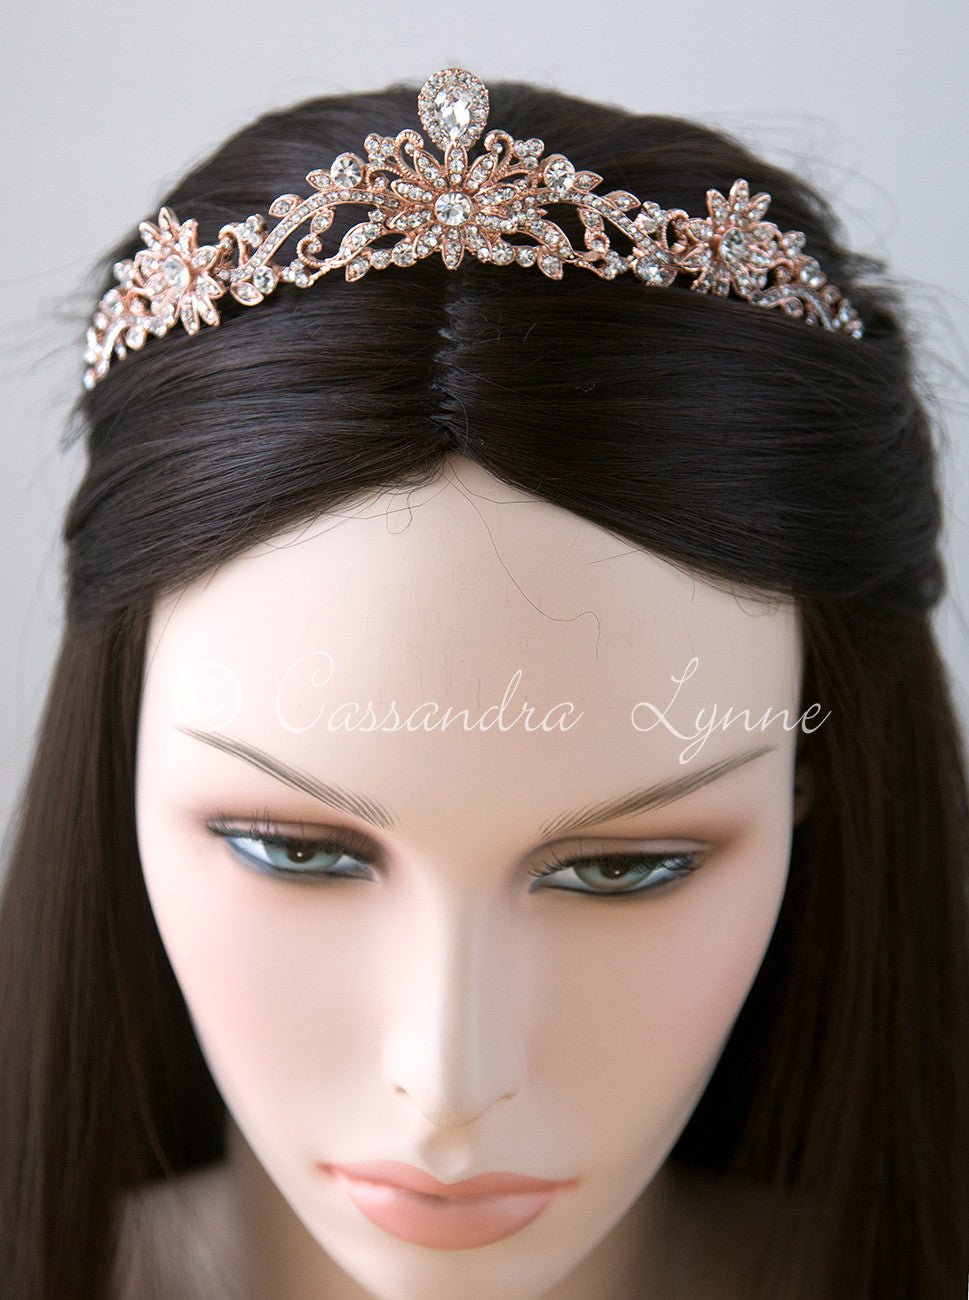 Rose Gold Princess Tiara with Floral Design - Cassandra Lynne